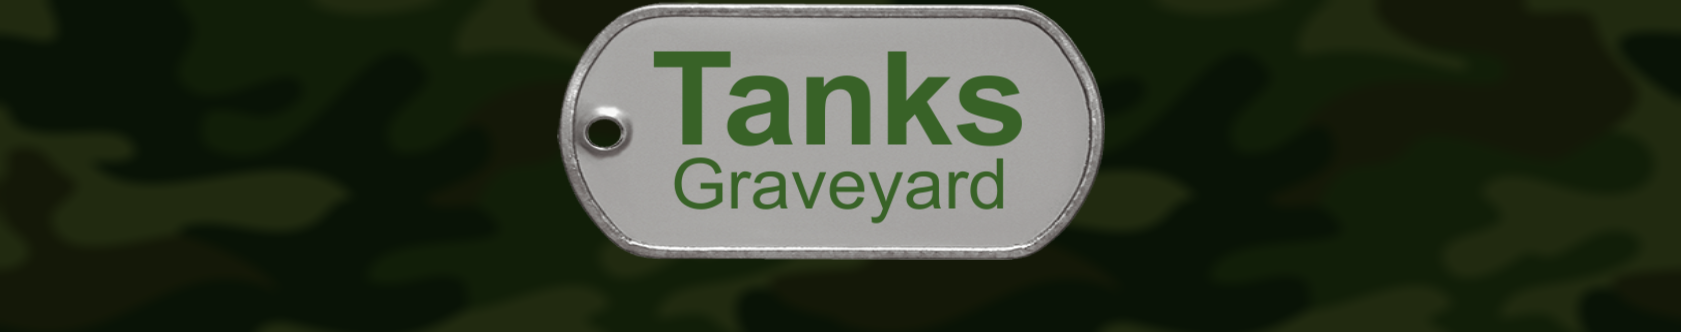 Tanks Graveyard